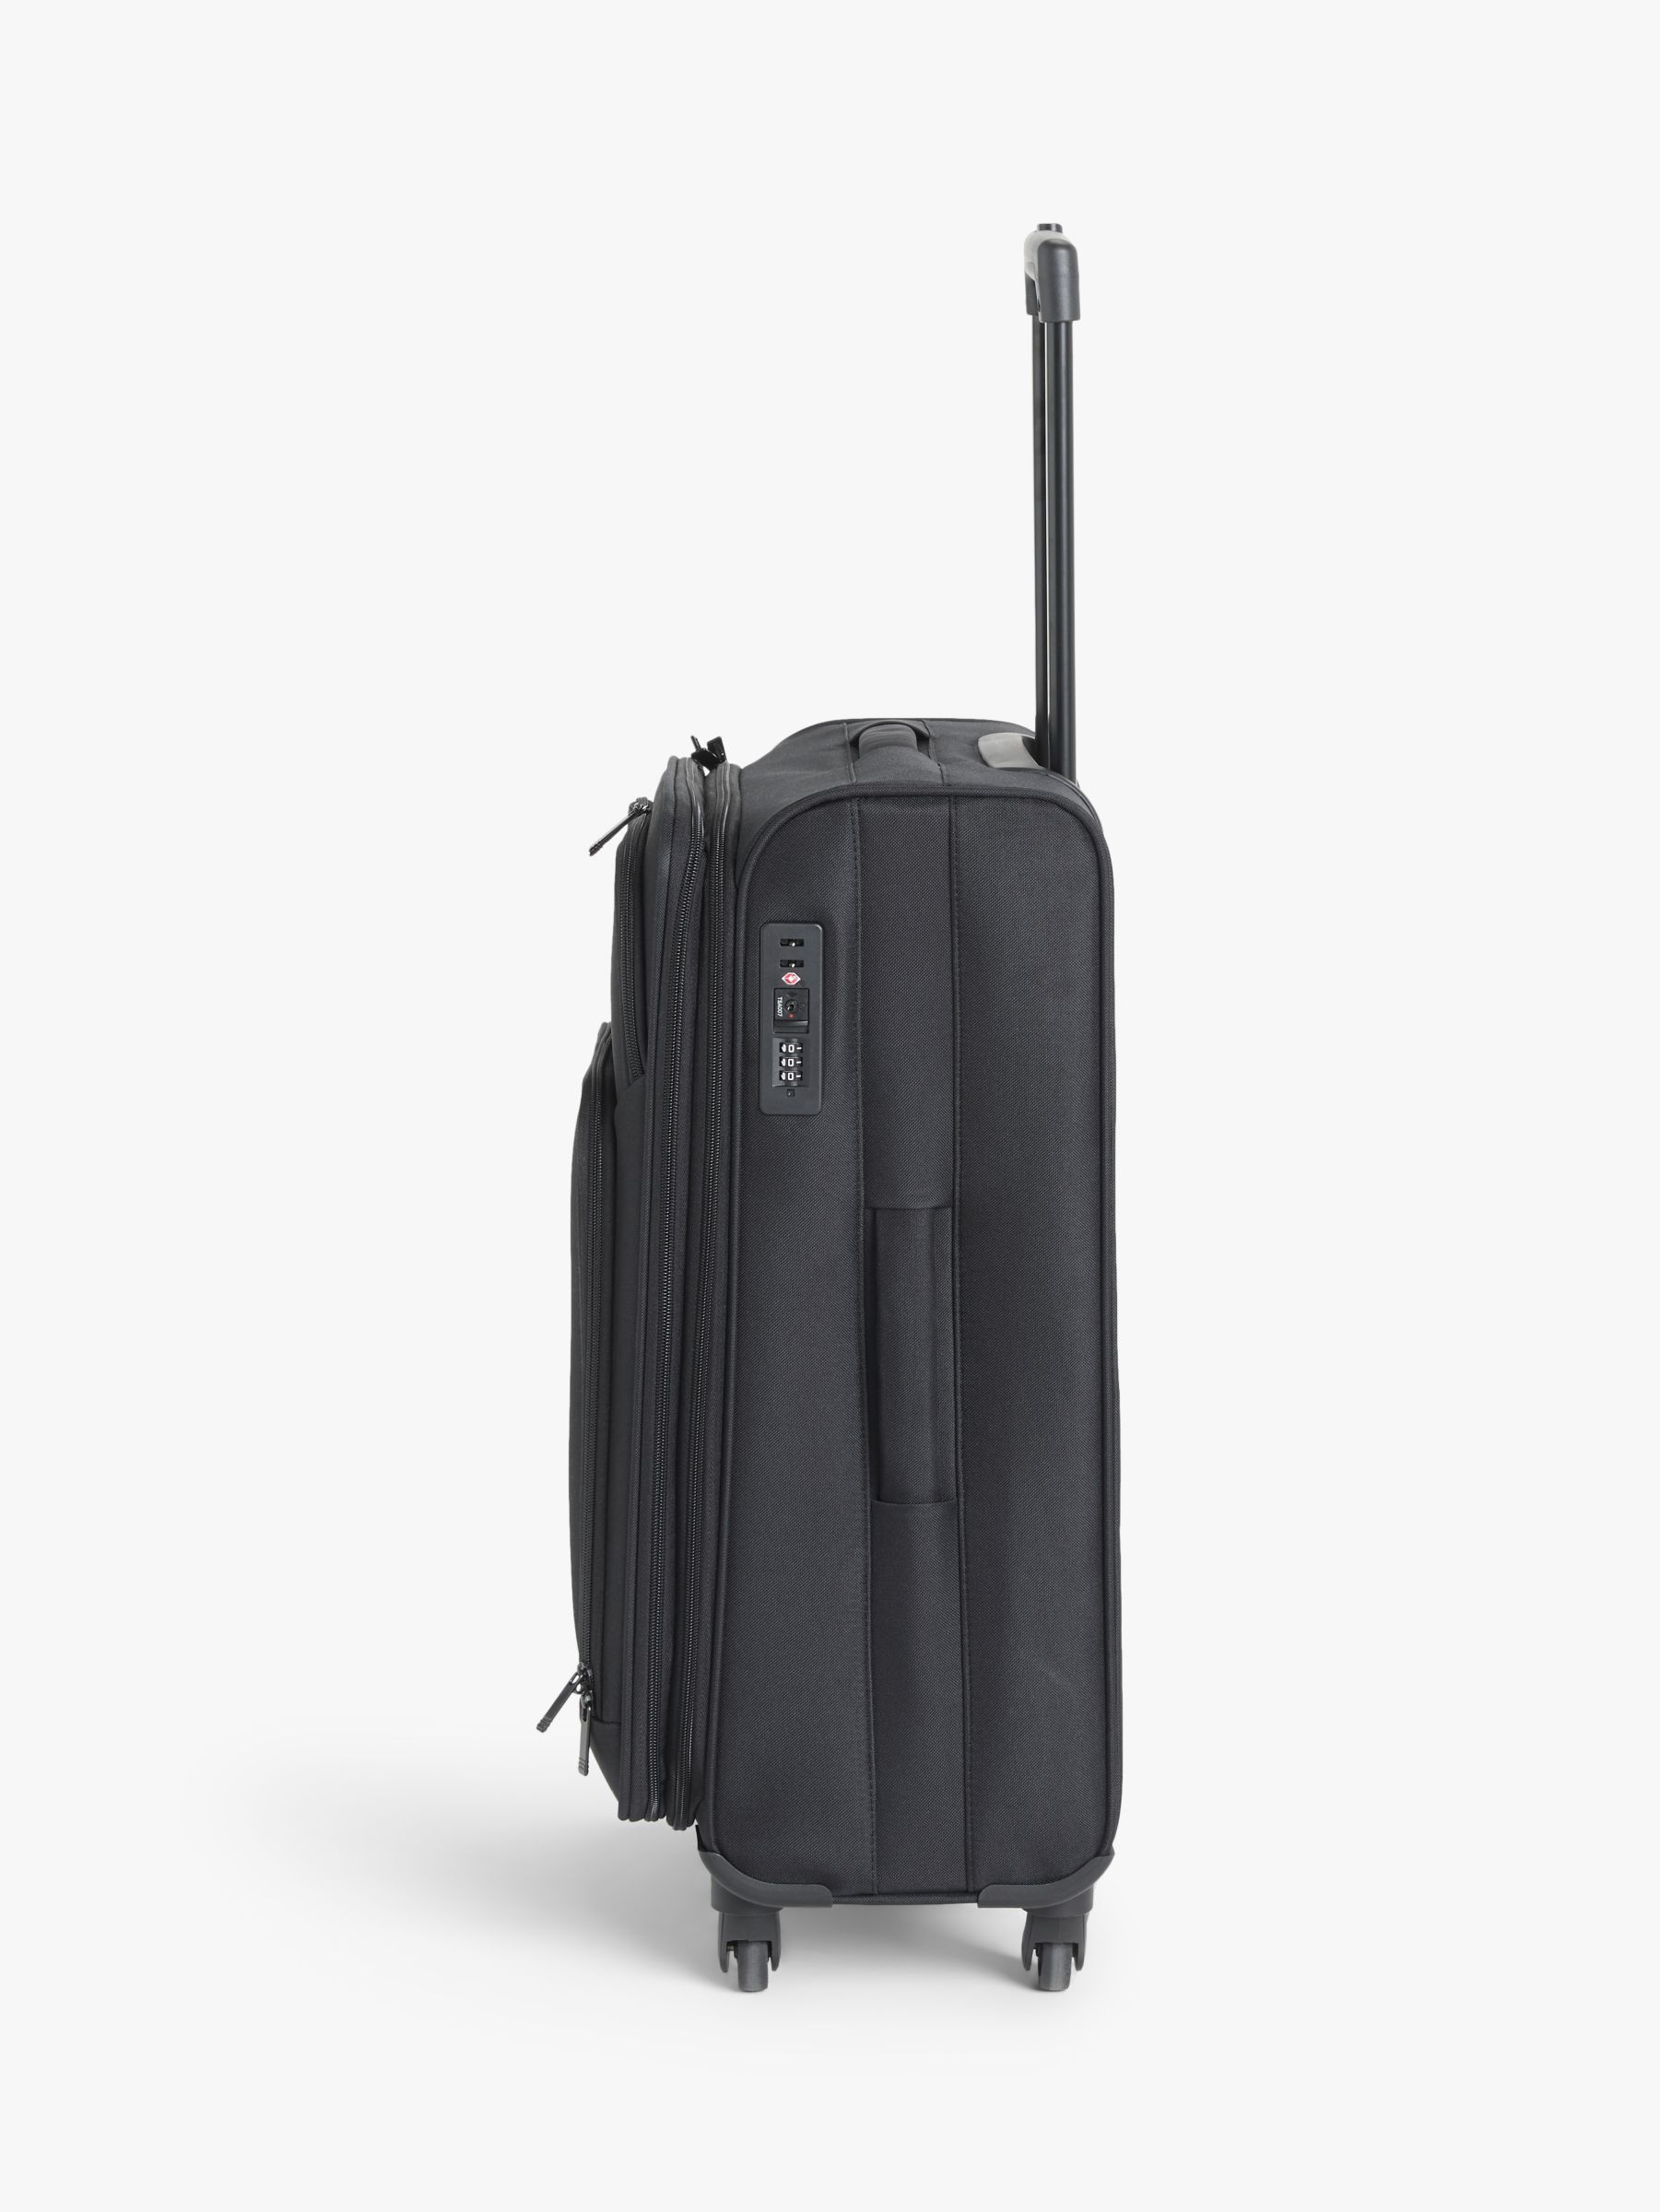 John Lewis & Partners Melbourne 66cm 4-Wheel Medium Suitcase, Black at John Lewis & Partners